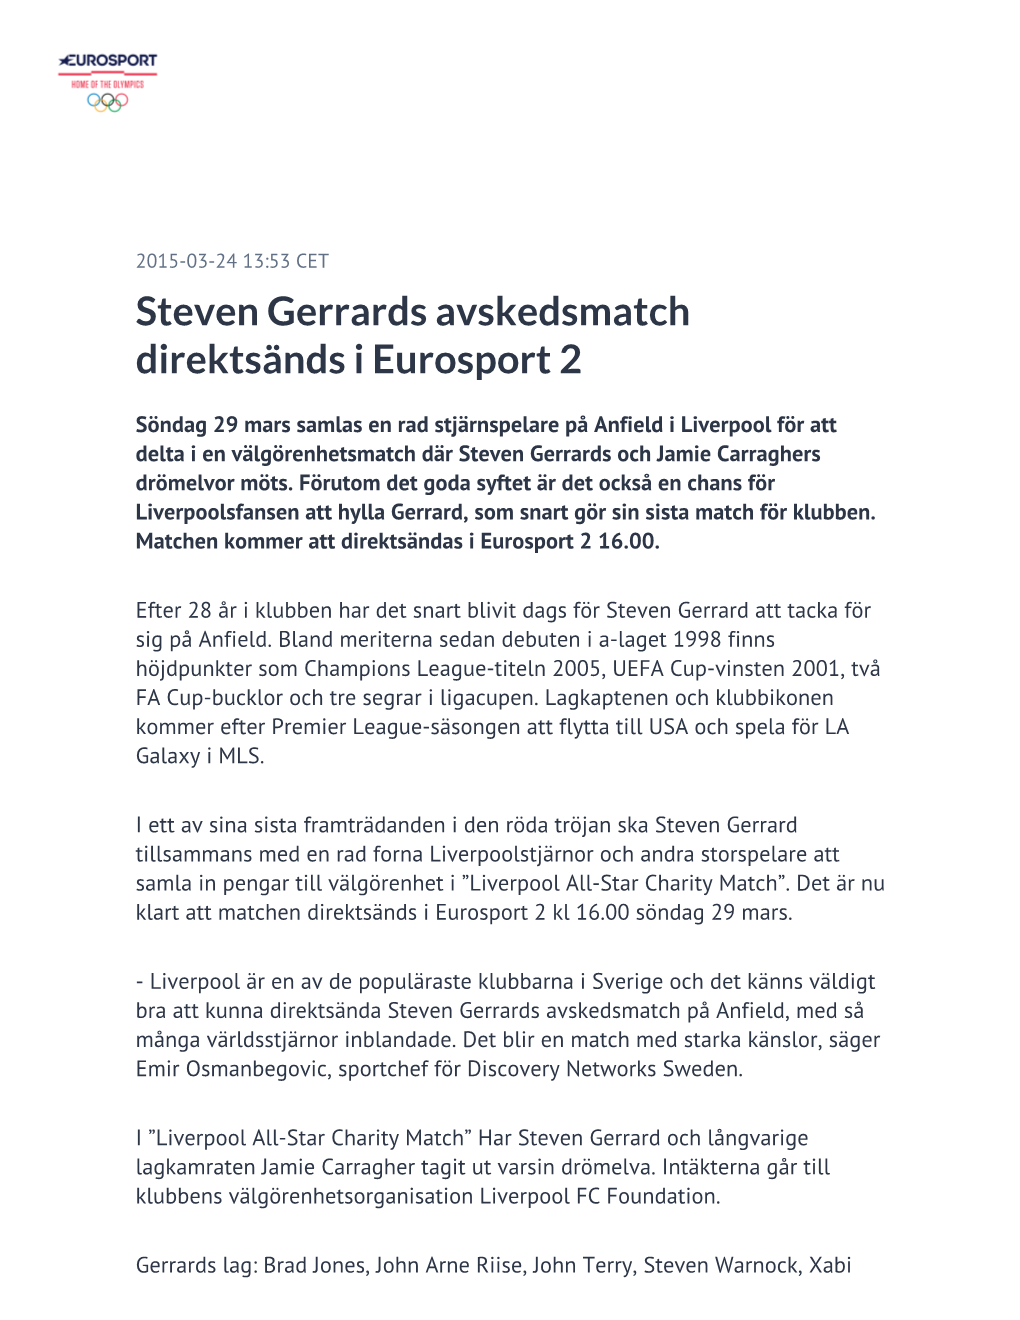 Steven Gerrards Avskedsmatch Direktsänds I Eurosport 2